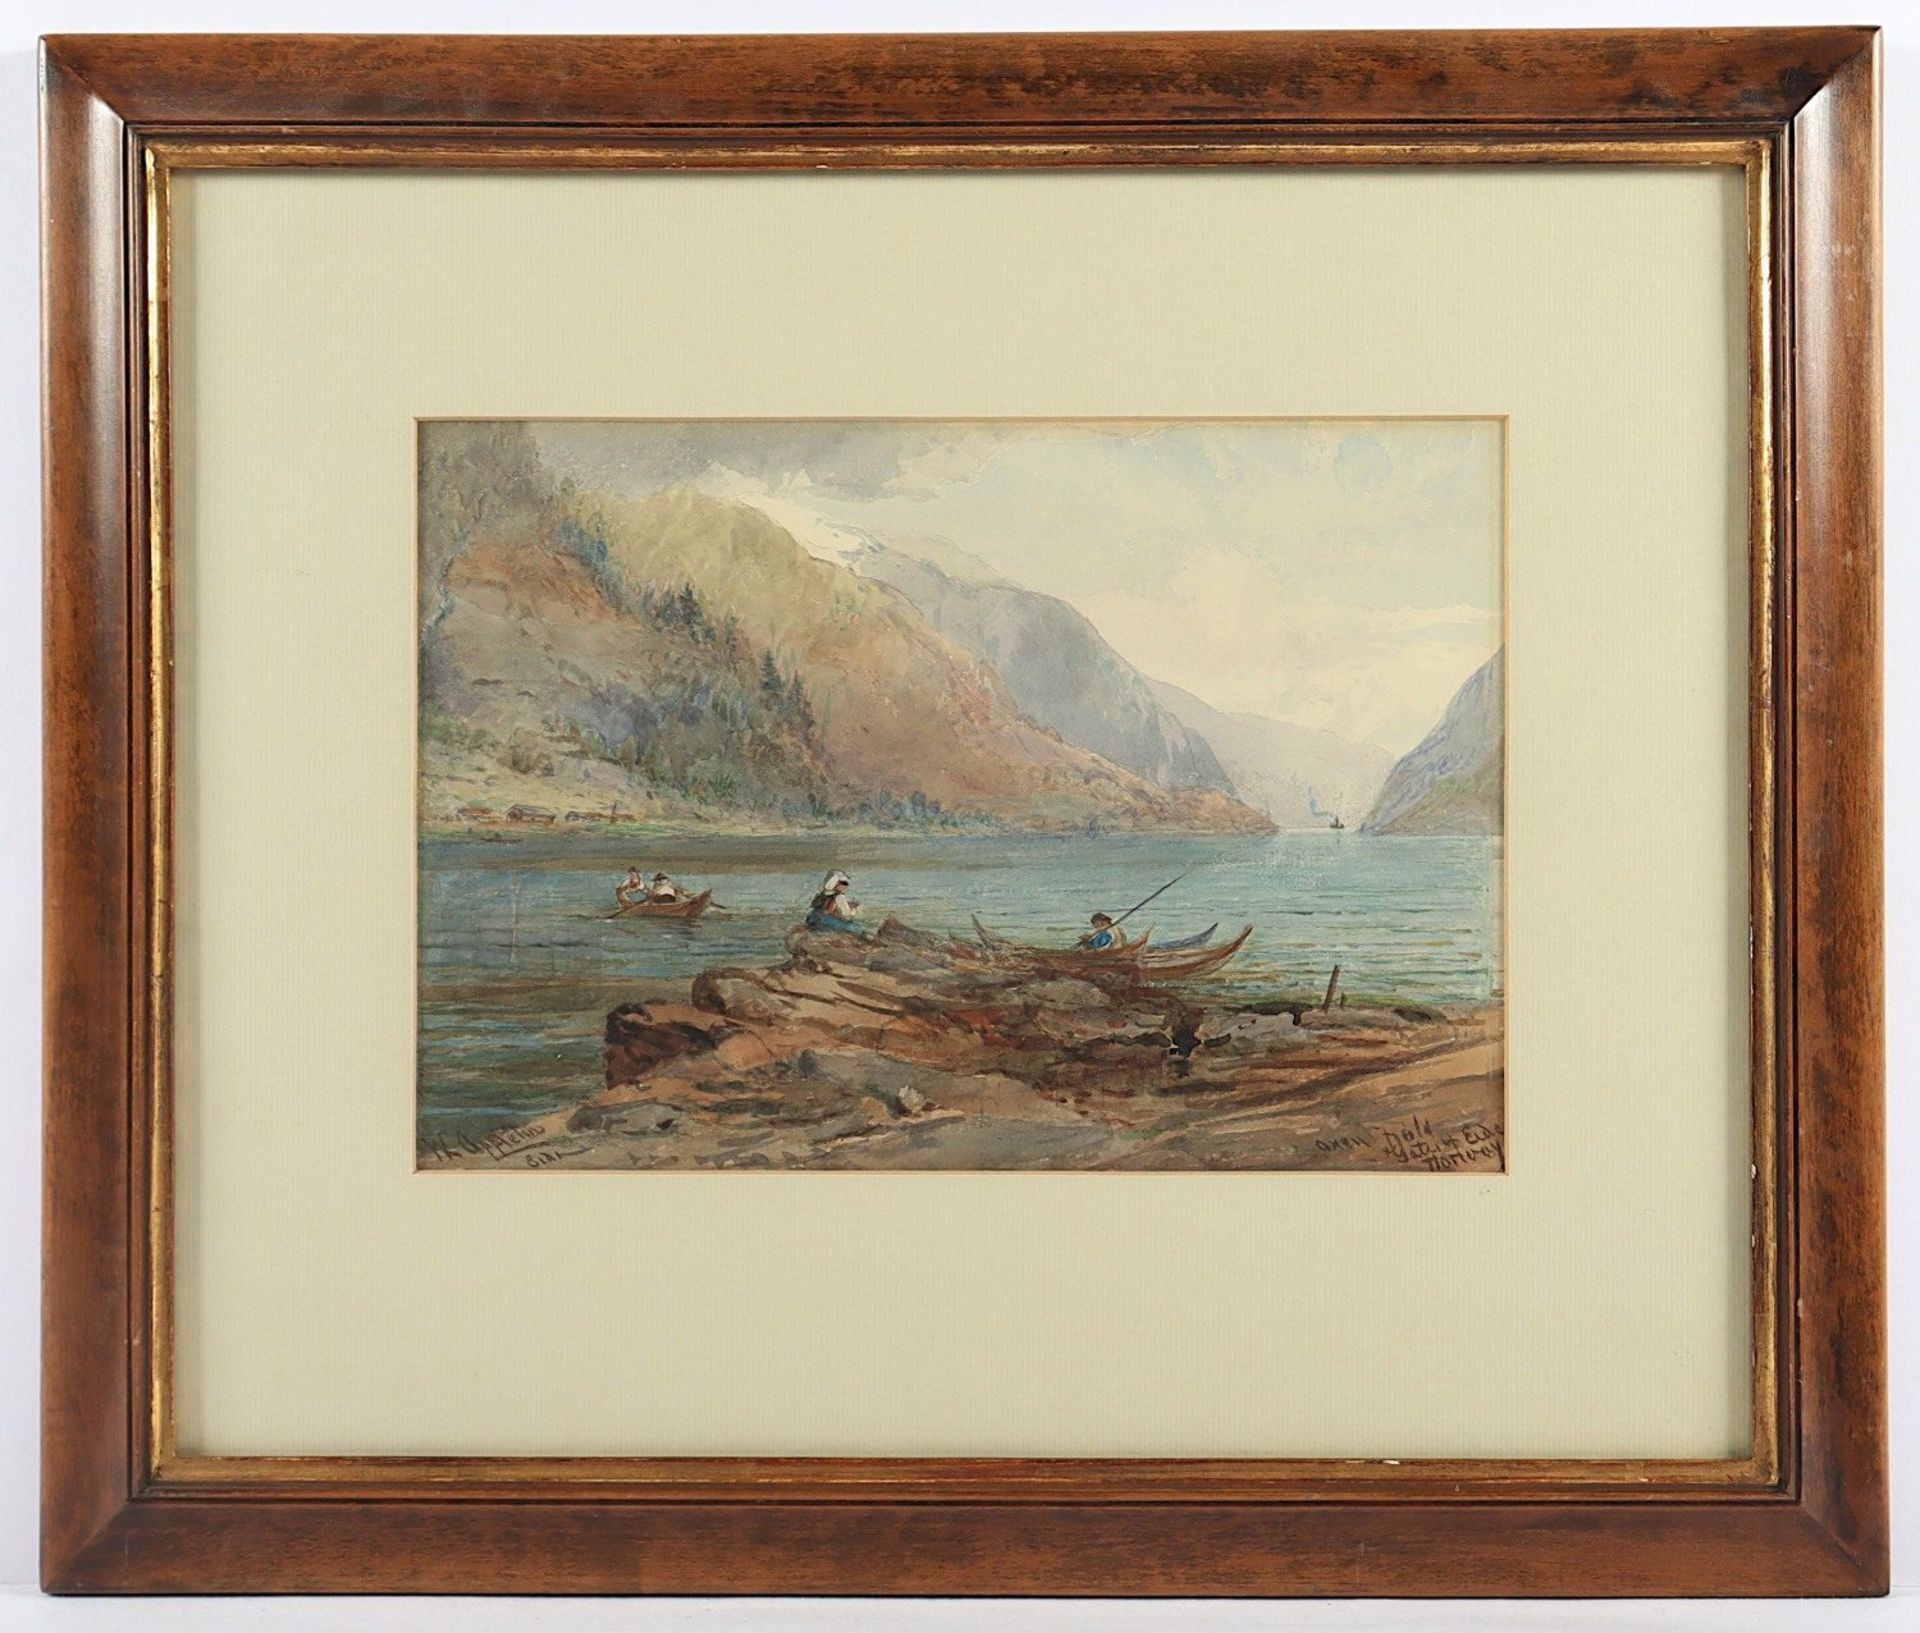 <de>APPELTON, William L. (Aquarellist des 19.Jh.), "Norwegische Fjordlandschaft bei Eide", Aquarell/